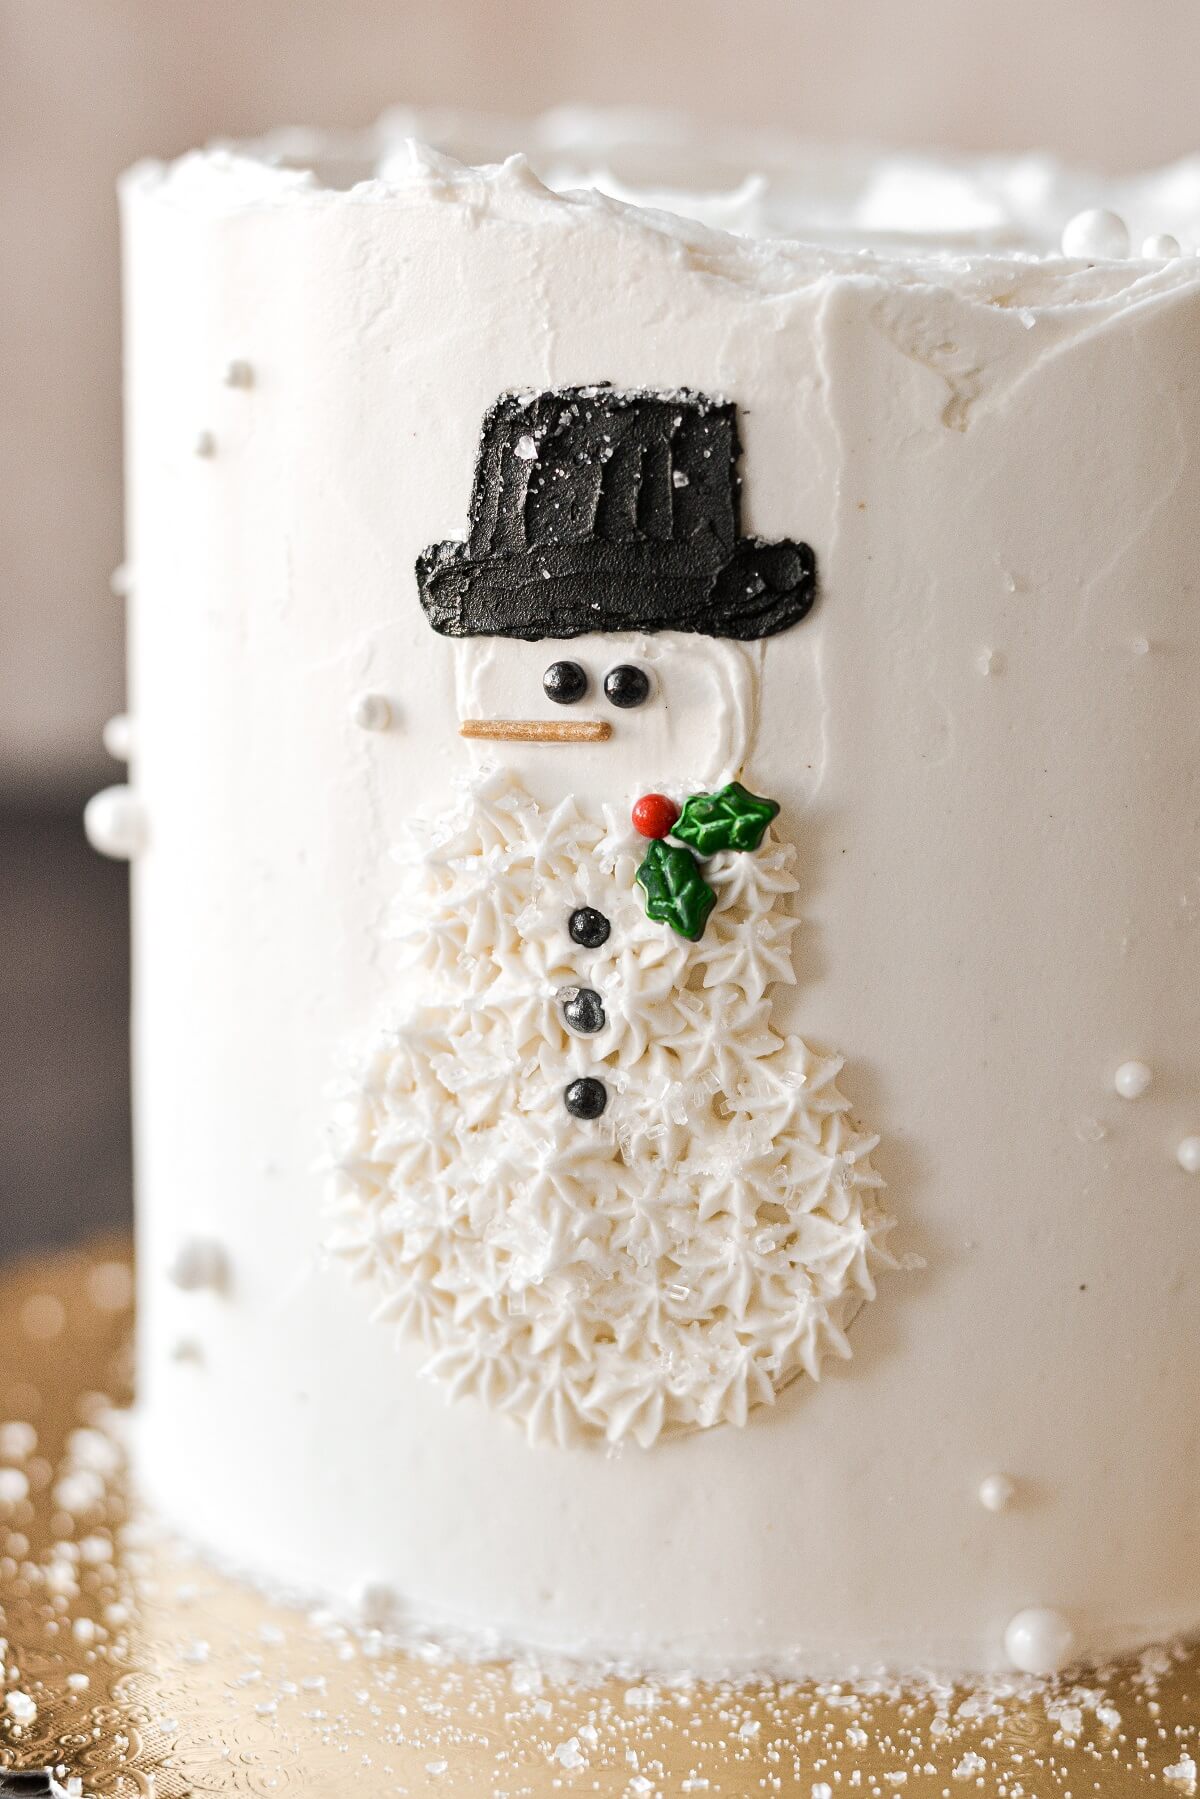 A Christmas cake with a buttercream snowman design.